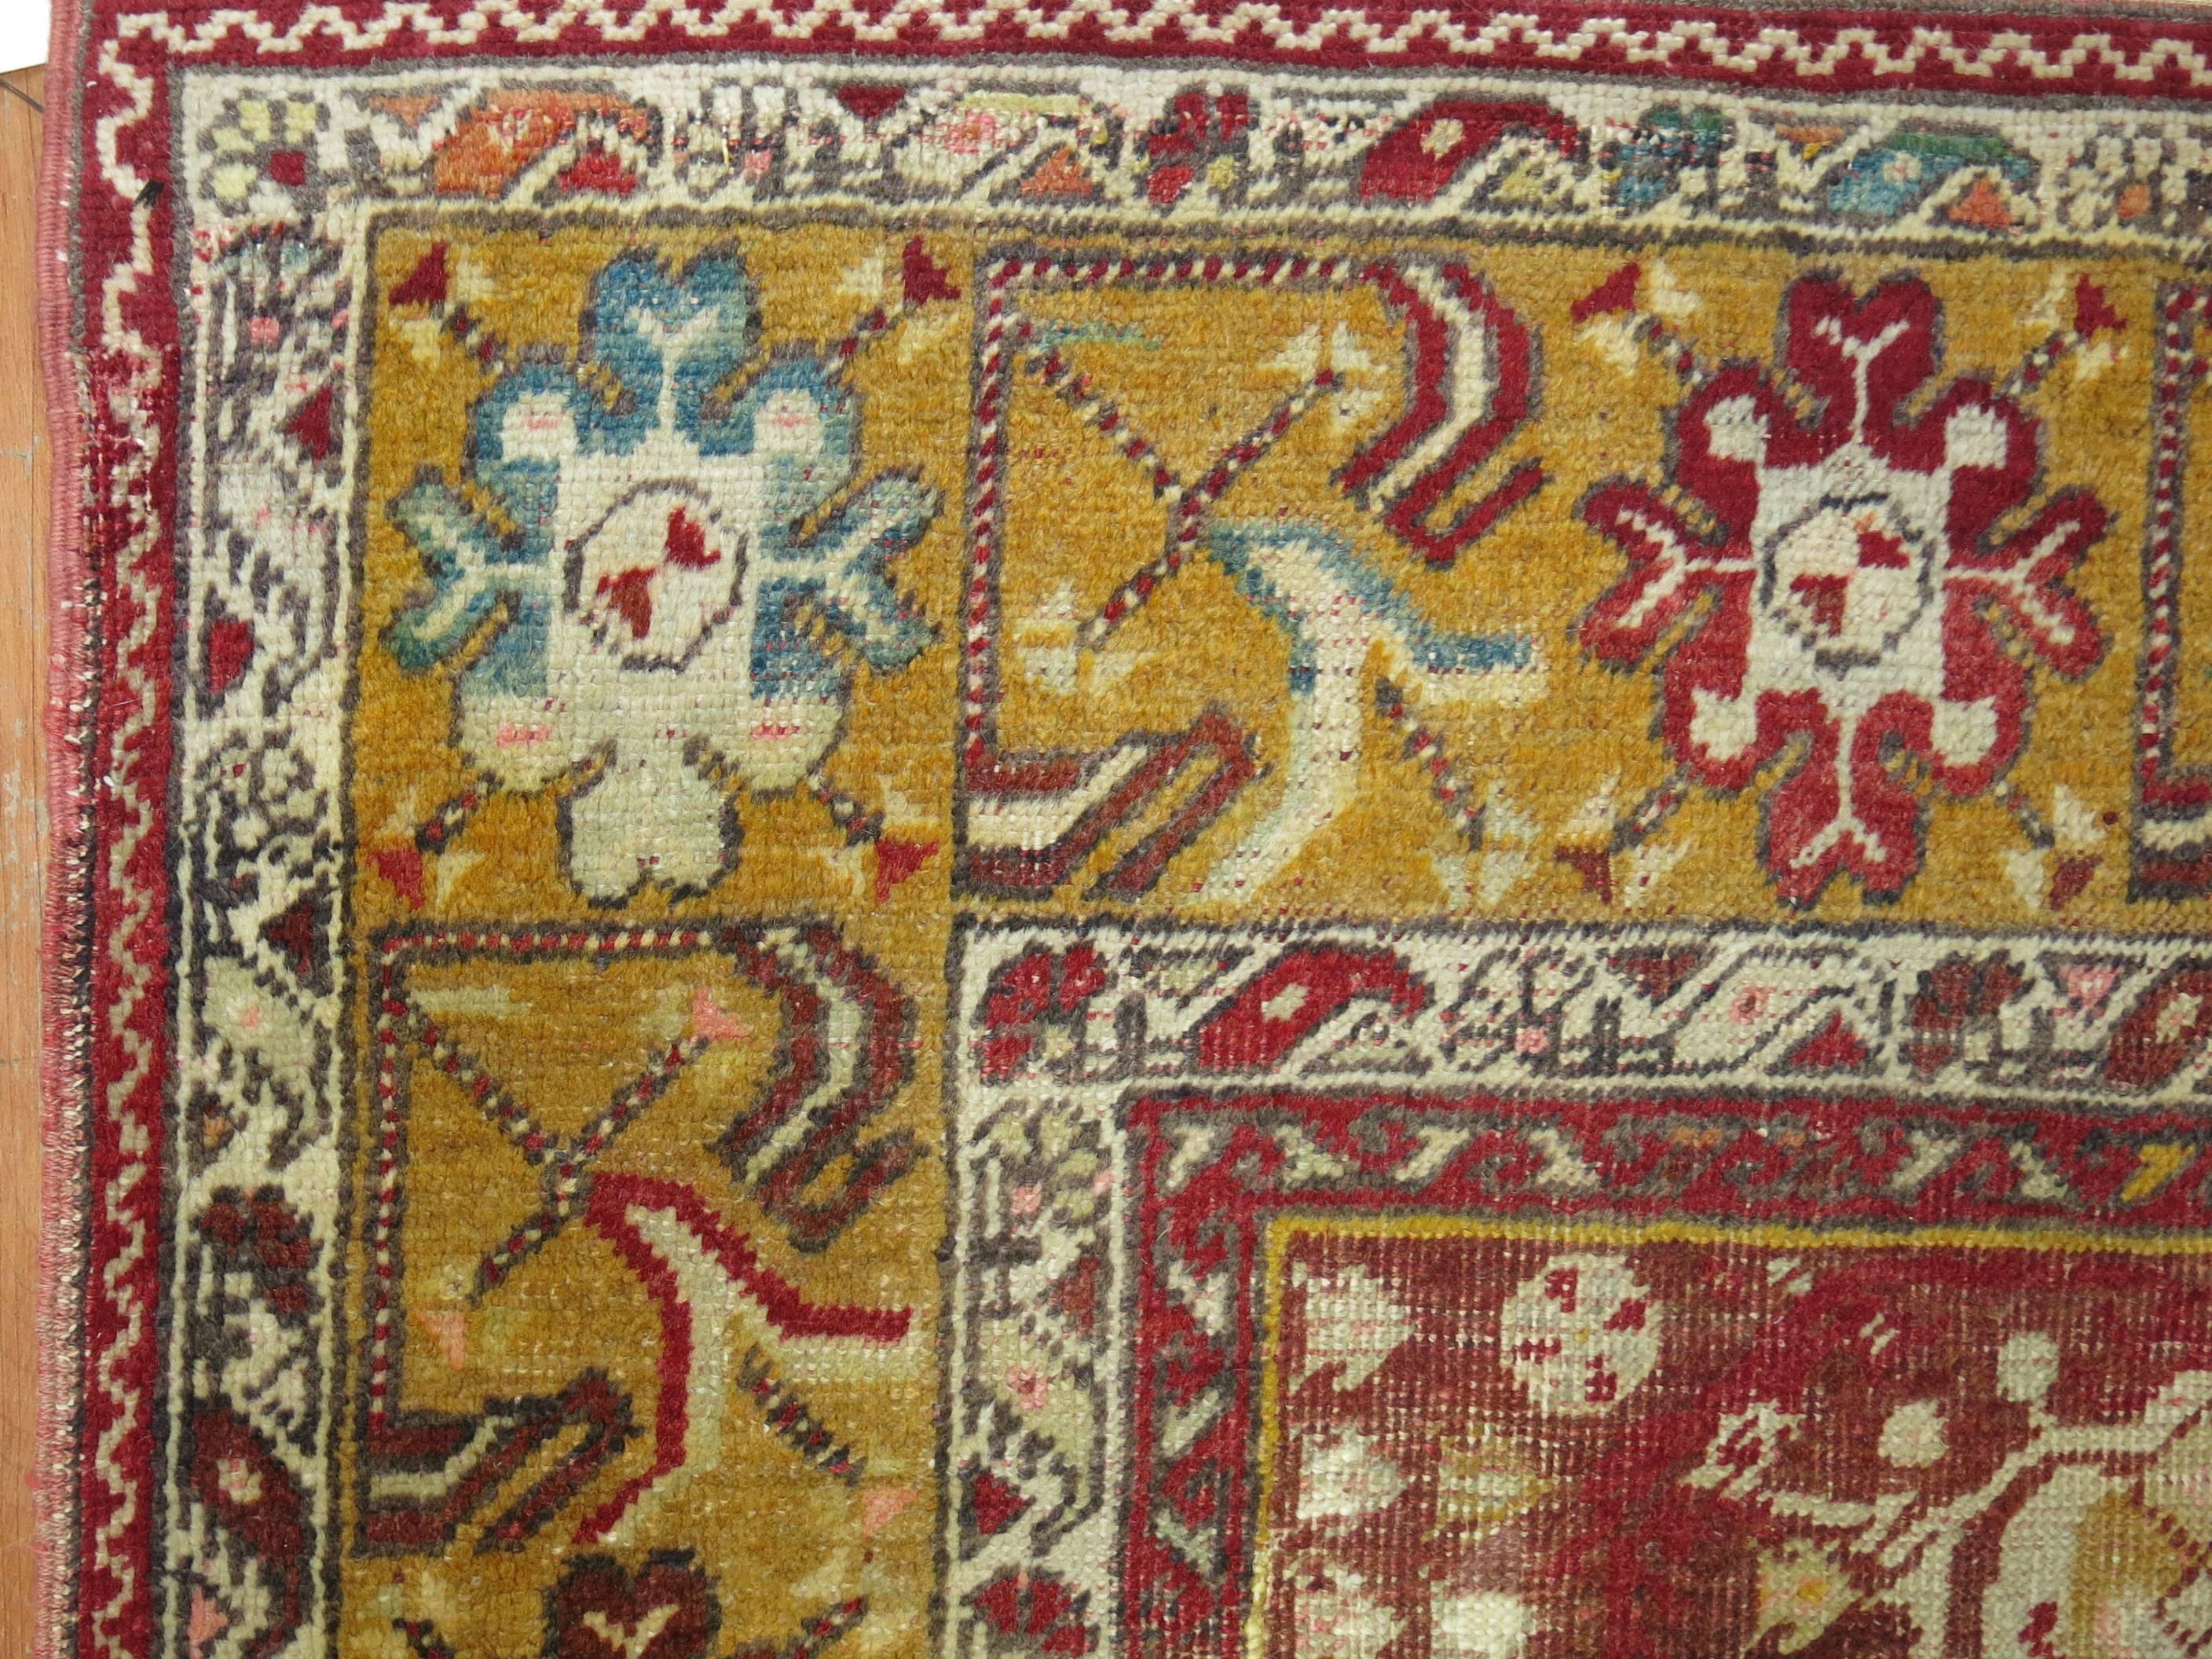 An early 20th century prayer niche motif decorative Turkish rug.

3'5'' x 5'10''